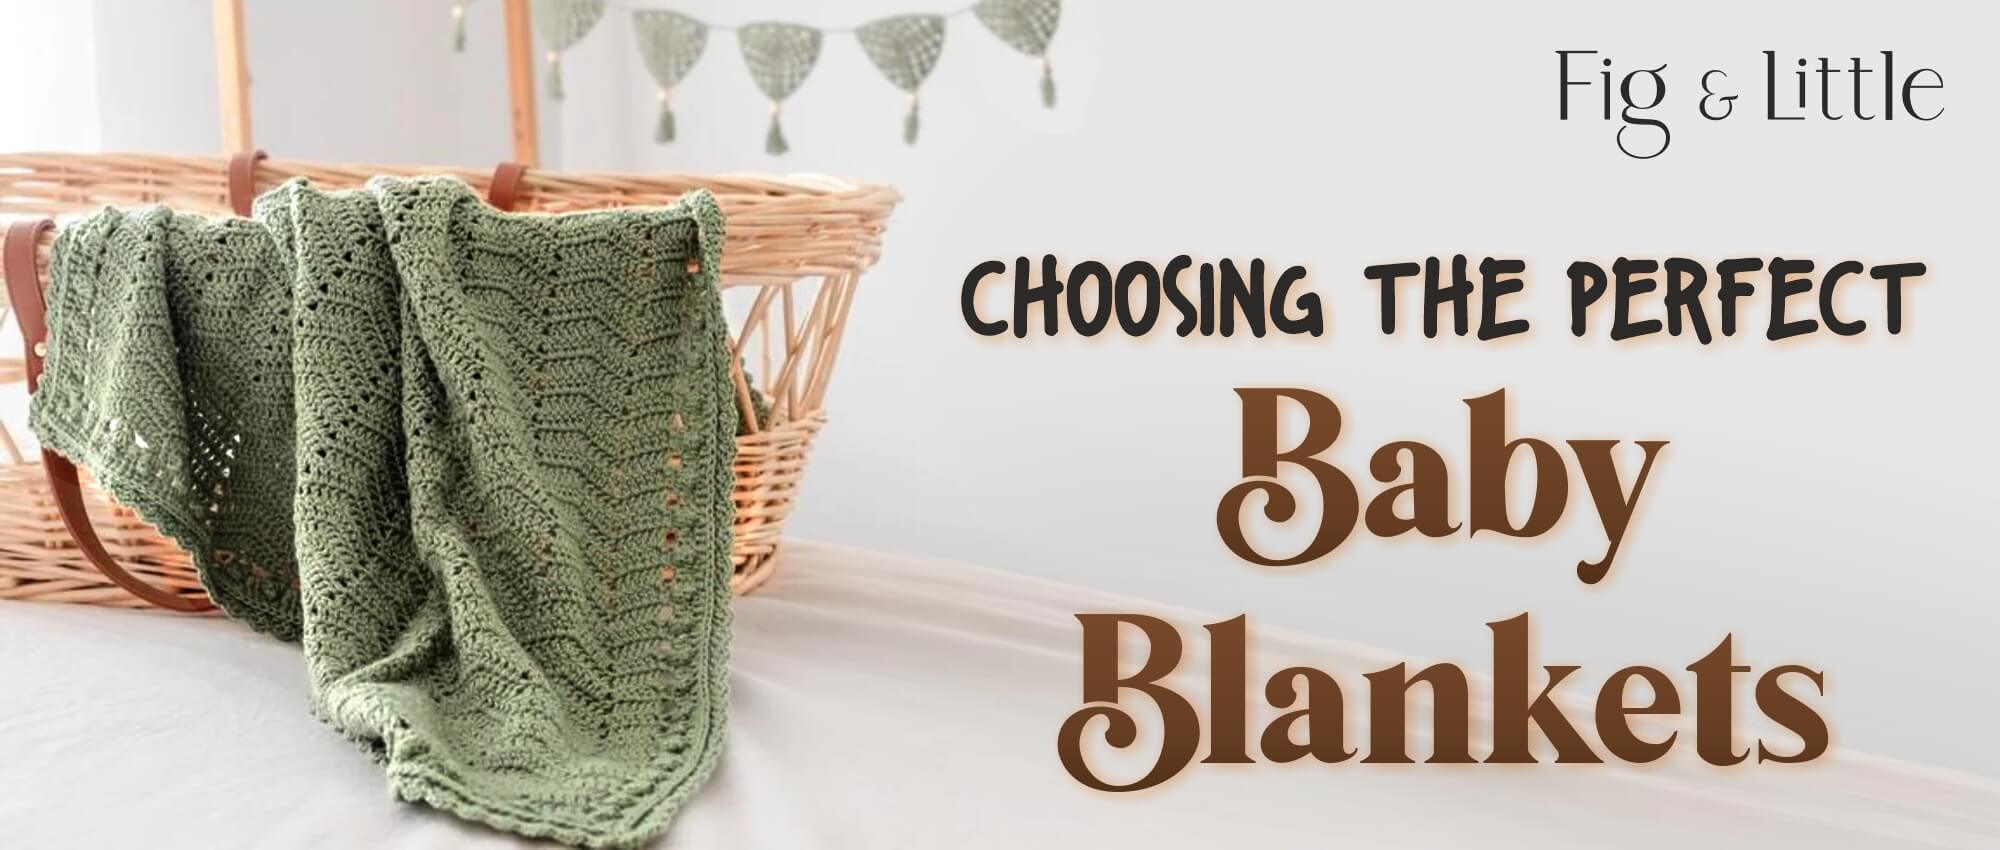 CHOOSING THE PERFECT BABY BLANKET